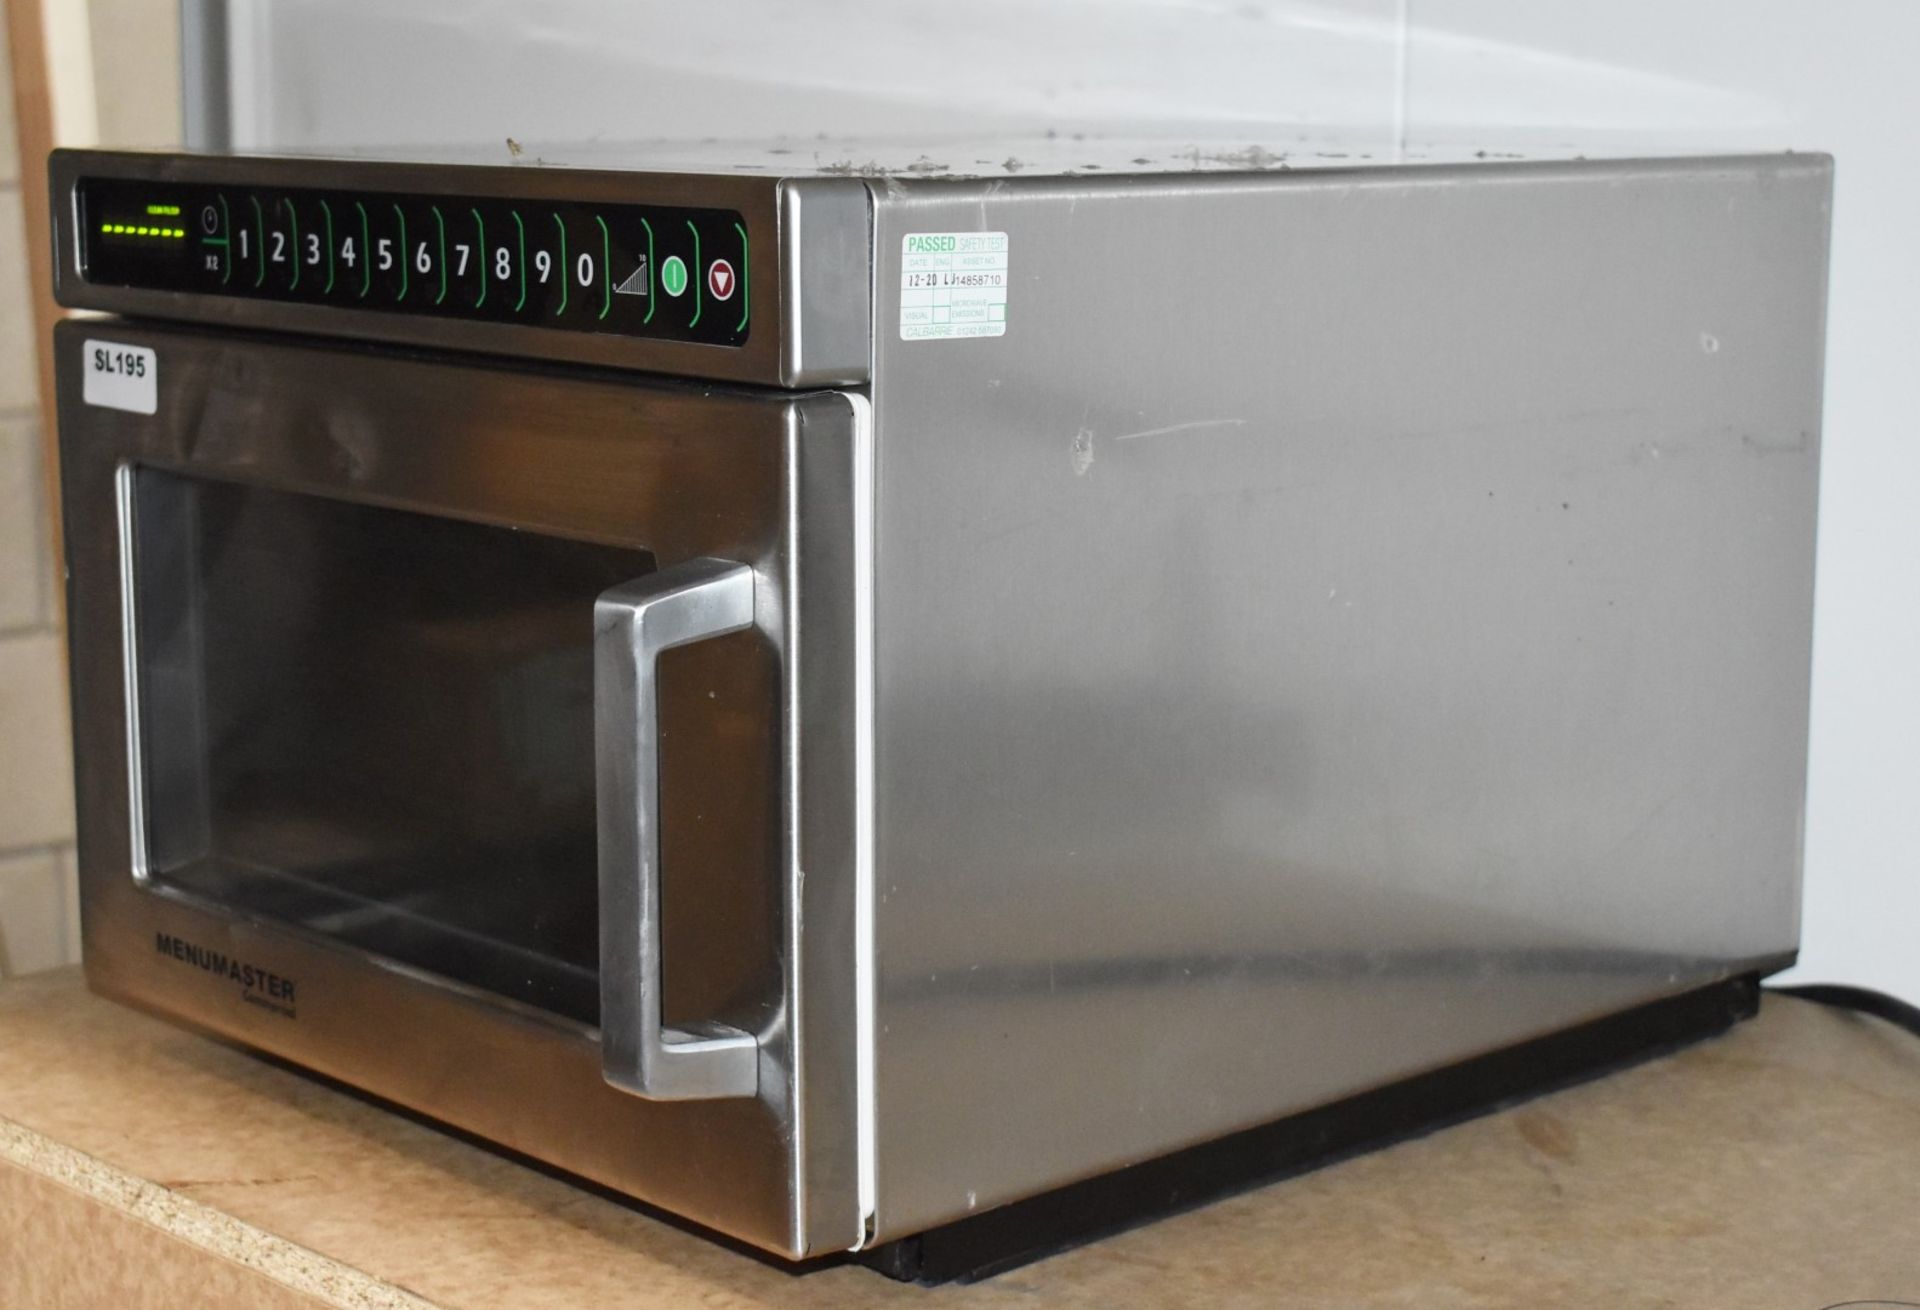 1 x Menumaster Commercial Microwave Oven - Model DEC14E2U - 1.4kW, 13A, 17Ltr - 2018 Model - - Image 8 of 12